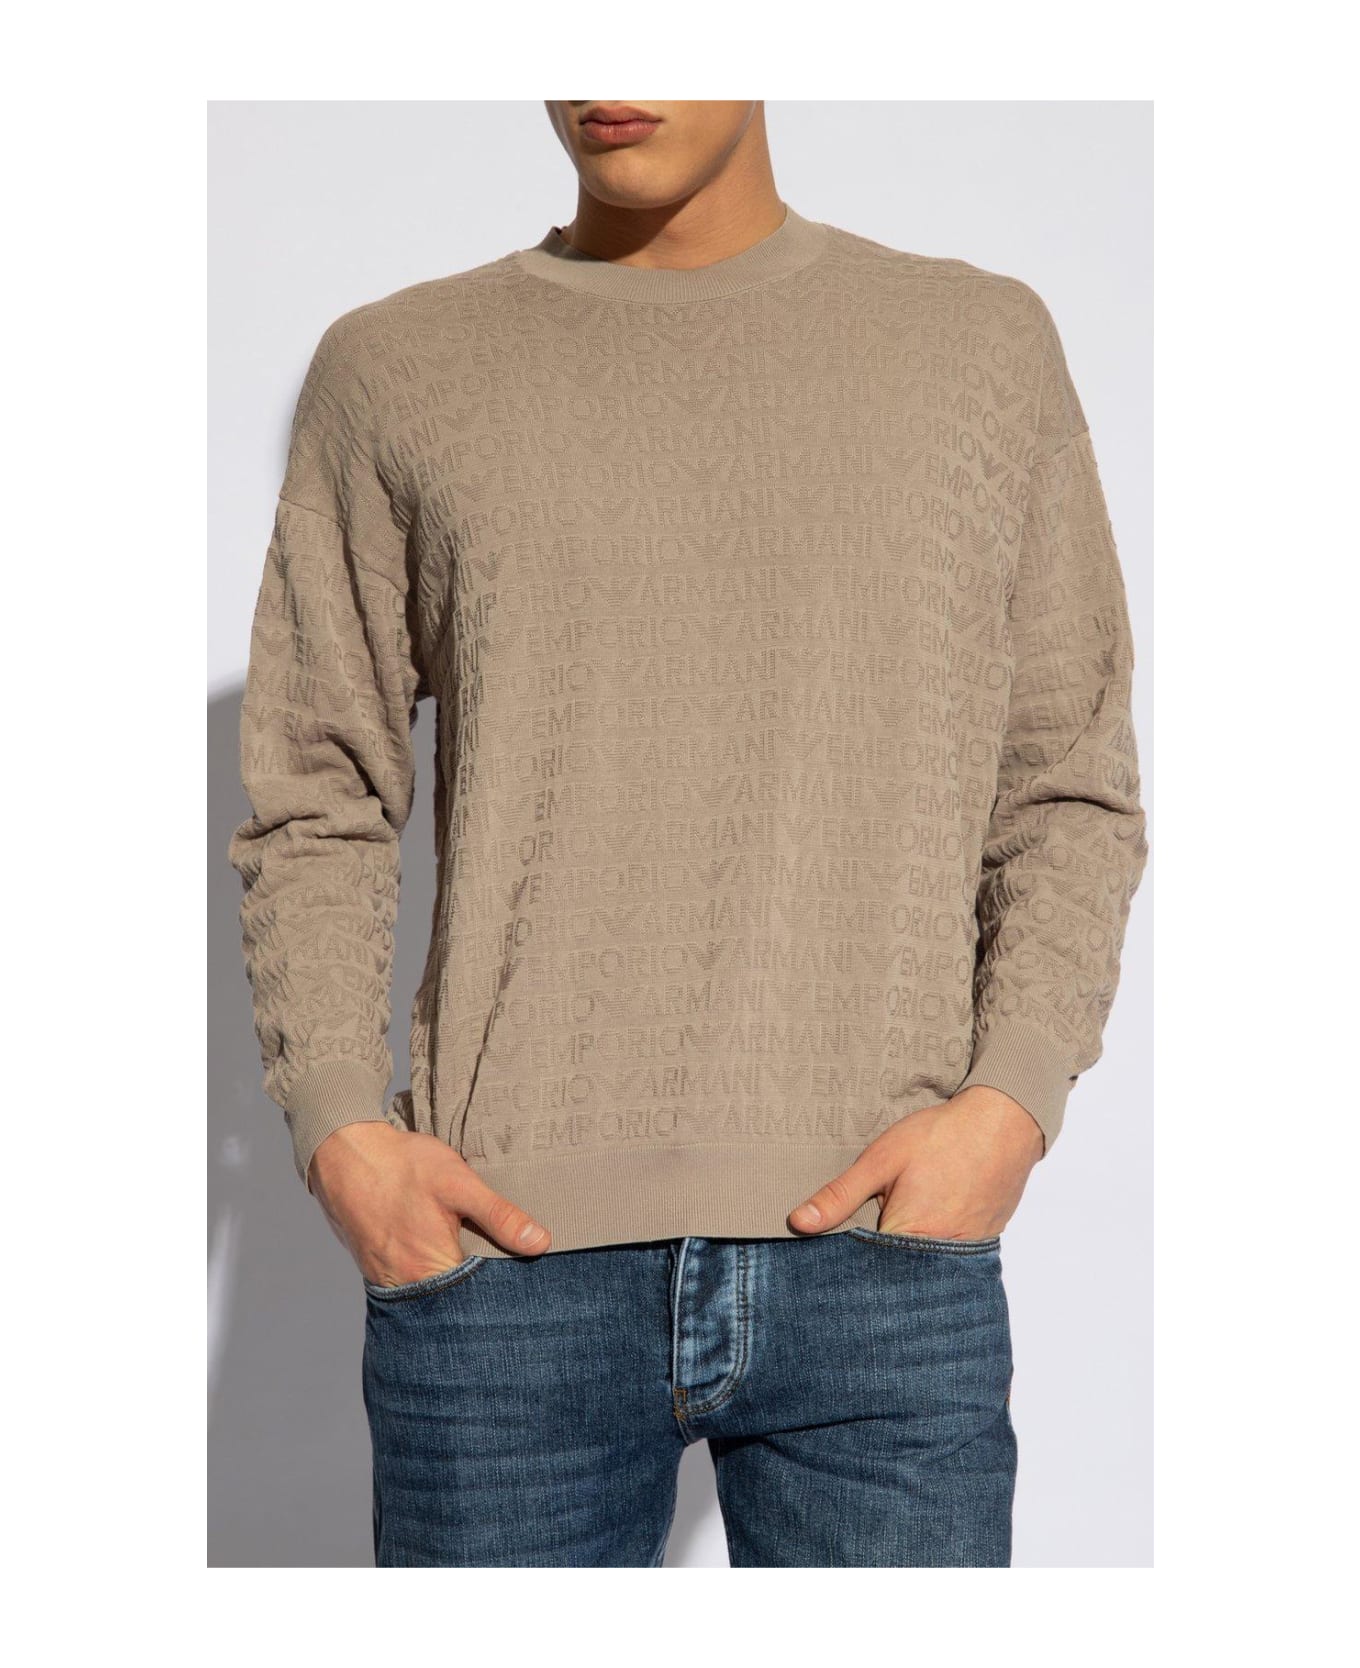 Emporio Armani Monogrammed Sweater ニットウェア